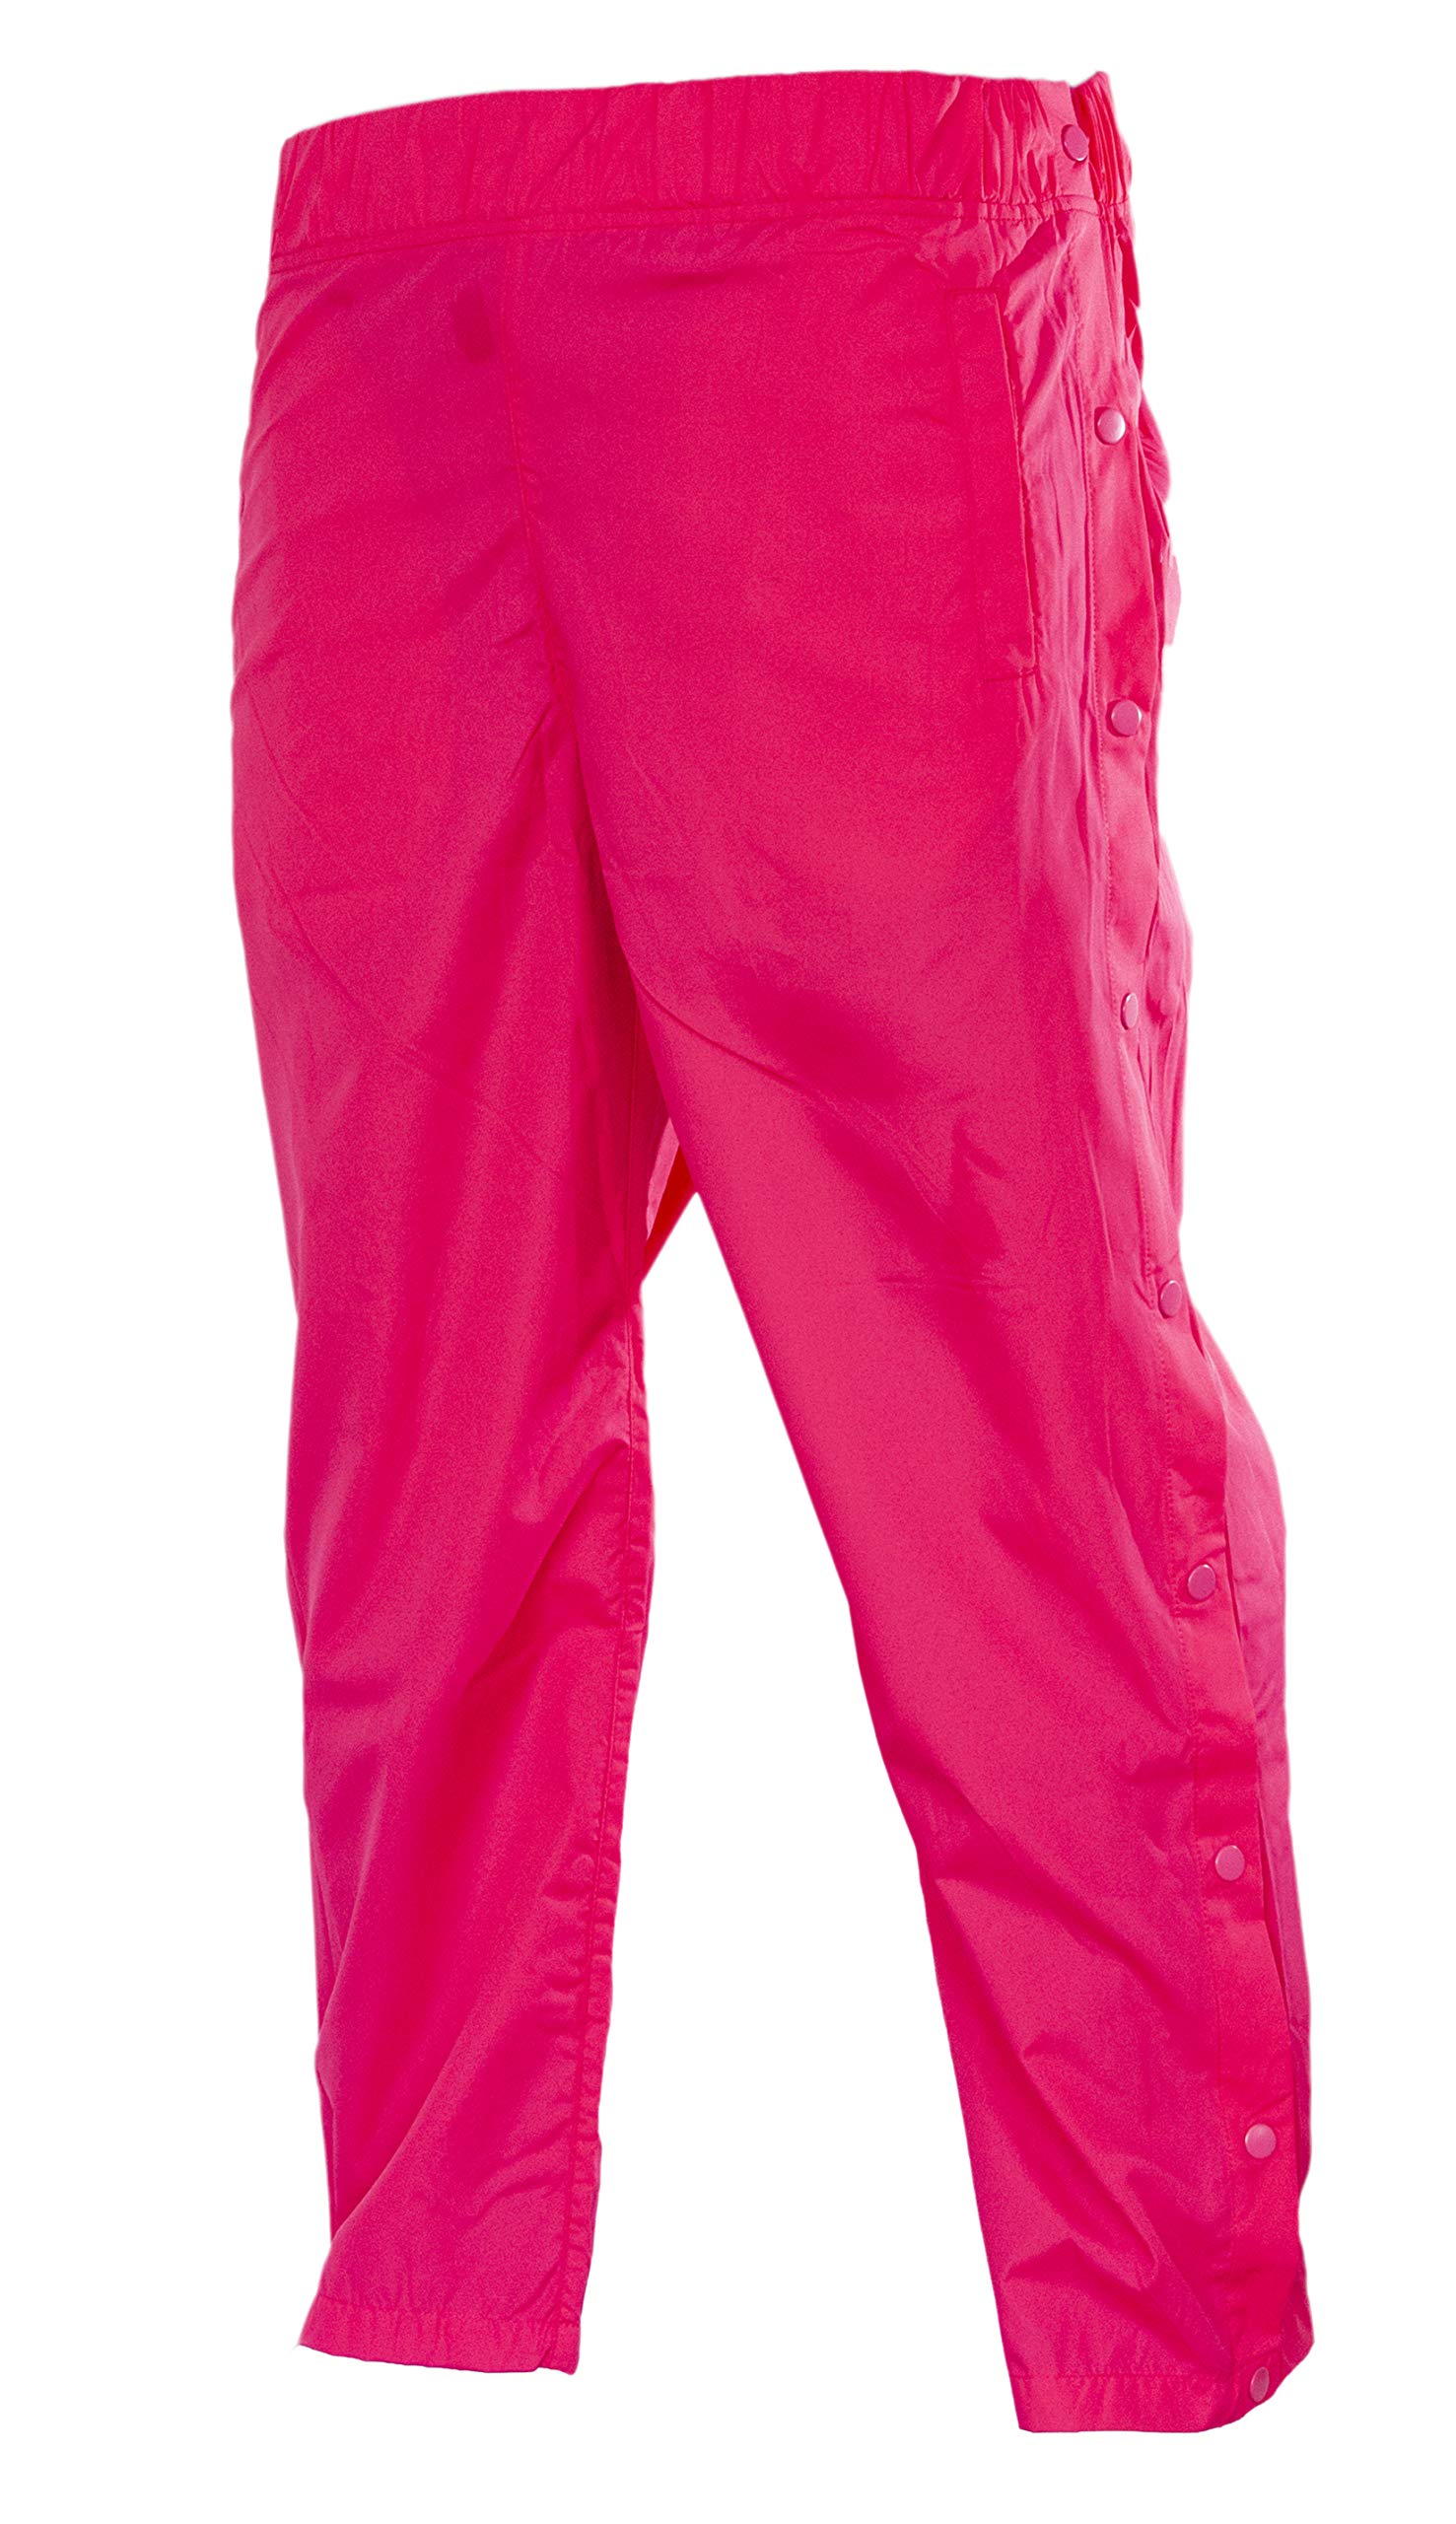 Retro Windbreaker Pants Funny Guy Mugs Tearaway Pants Premium Breakaway Pants